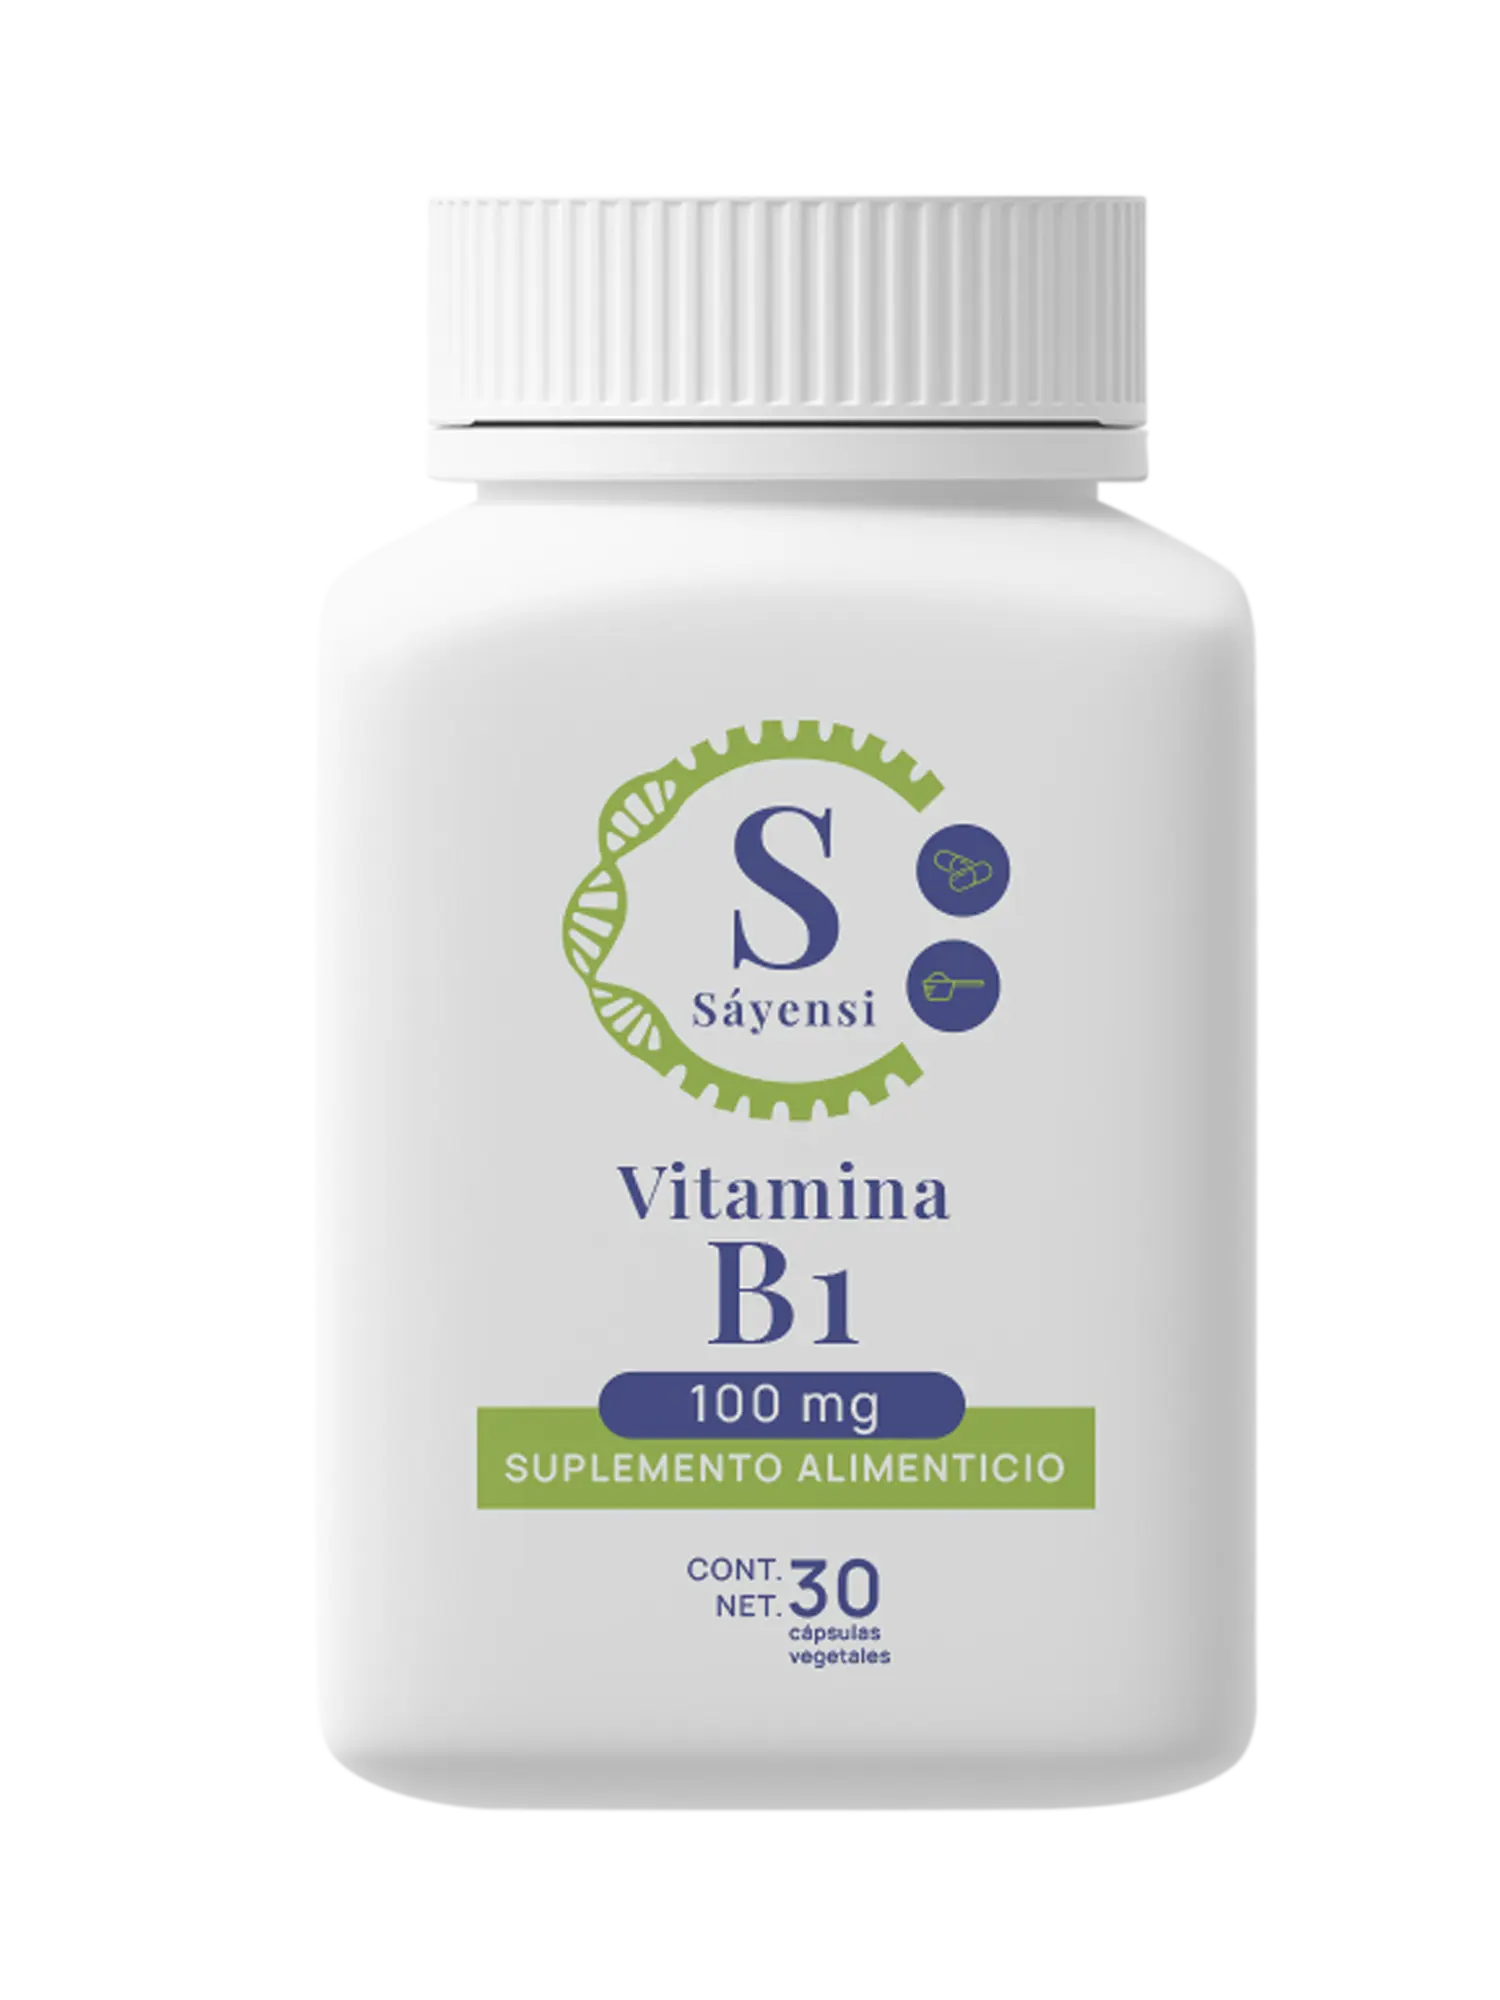 Vitamina B1 Sáyensi - 100mg - PURESUPPLY